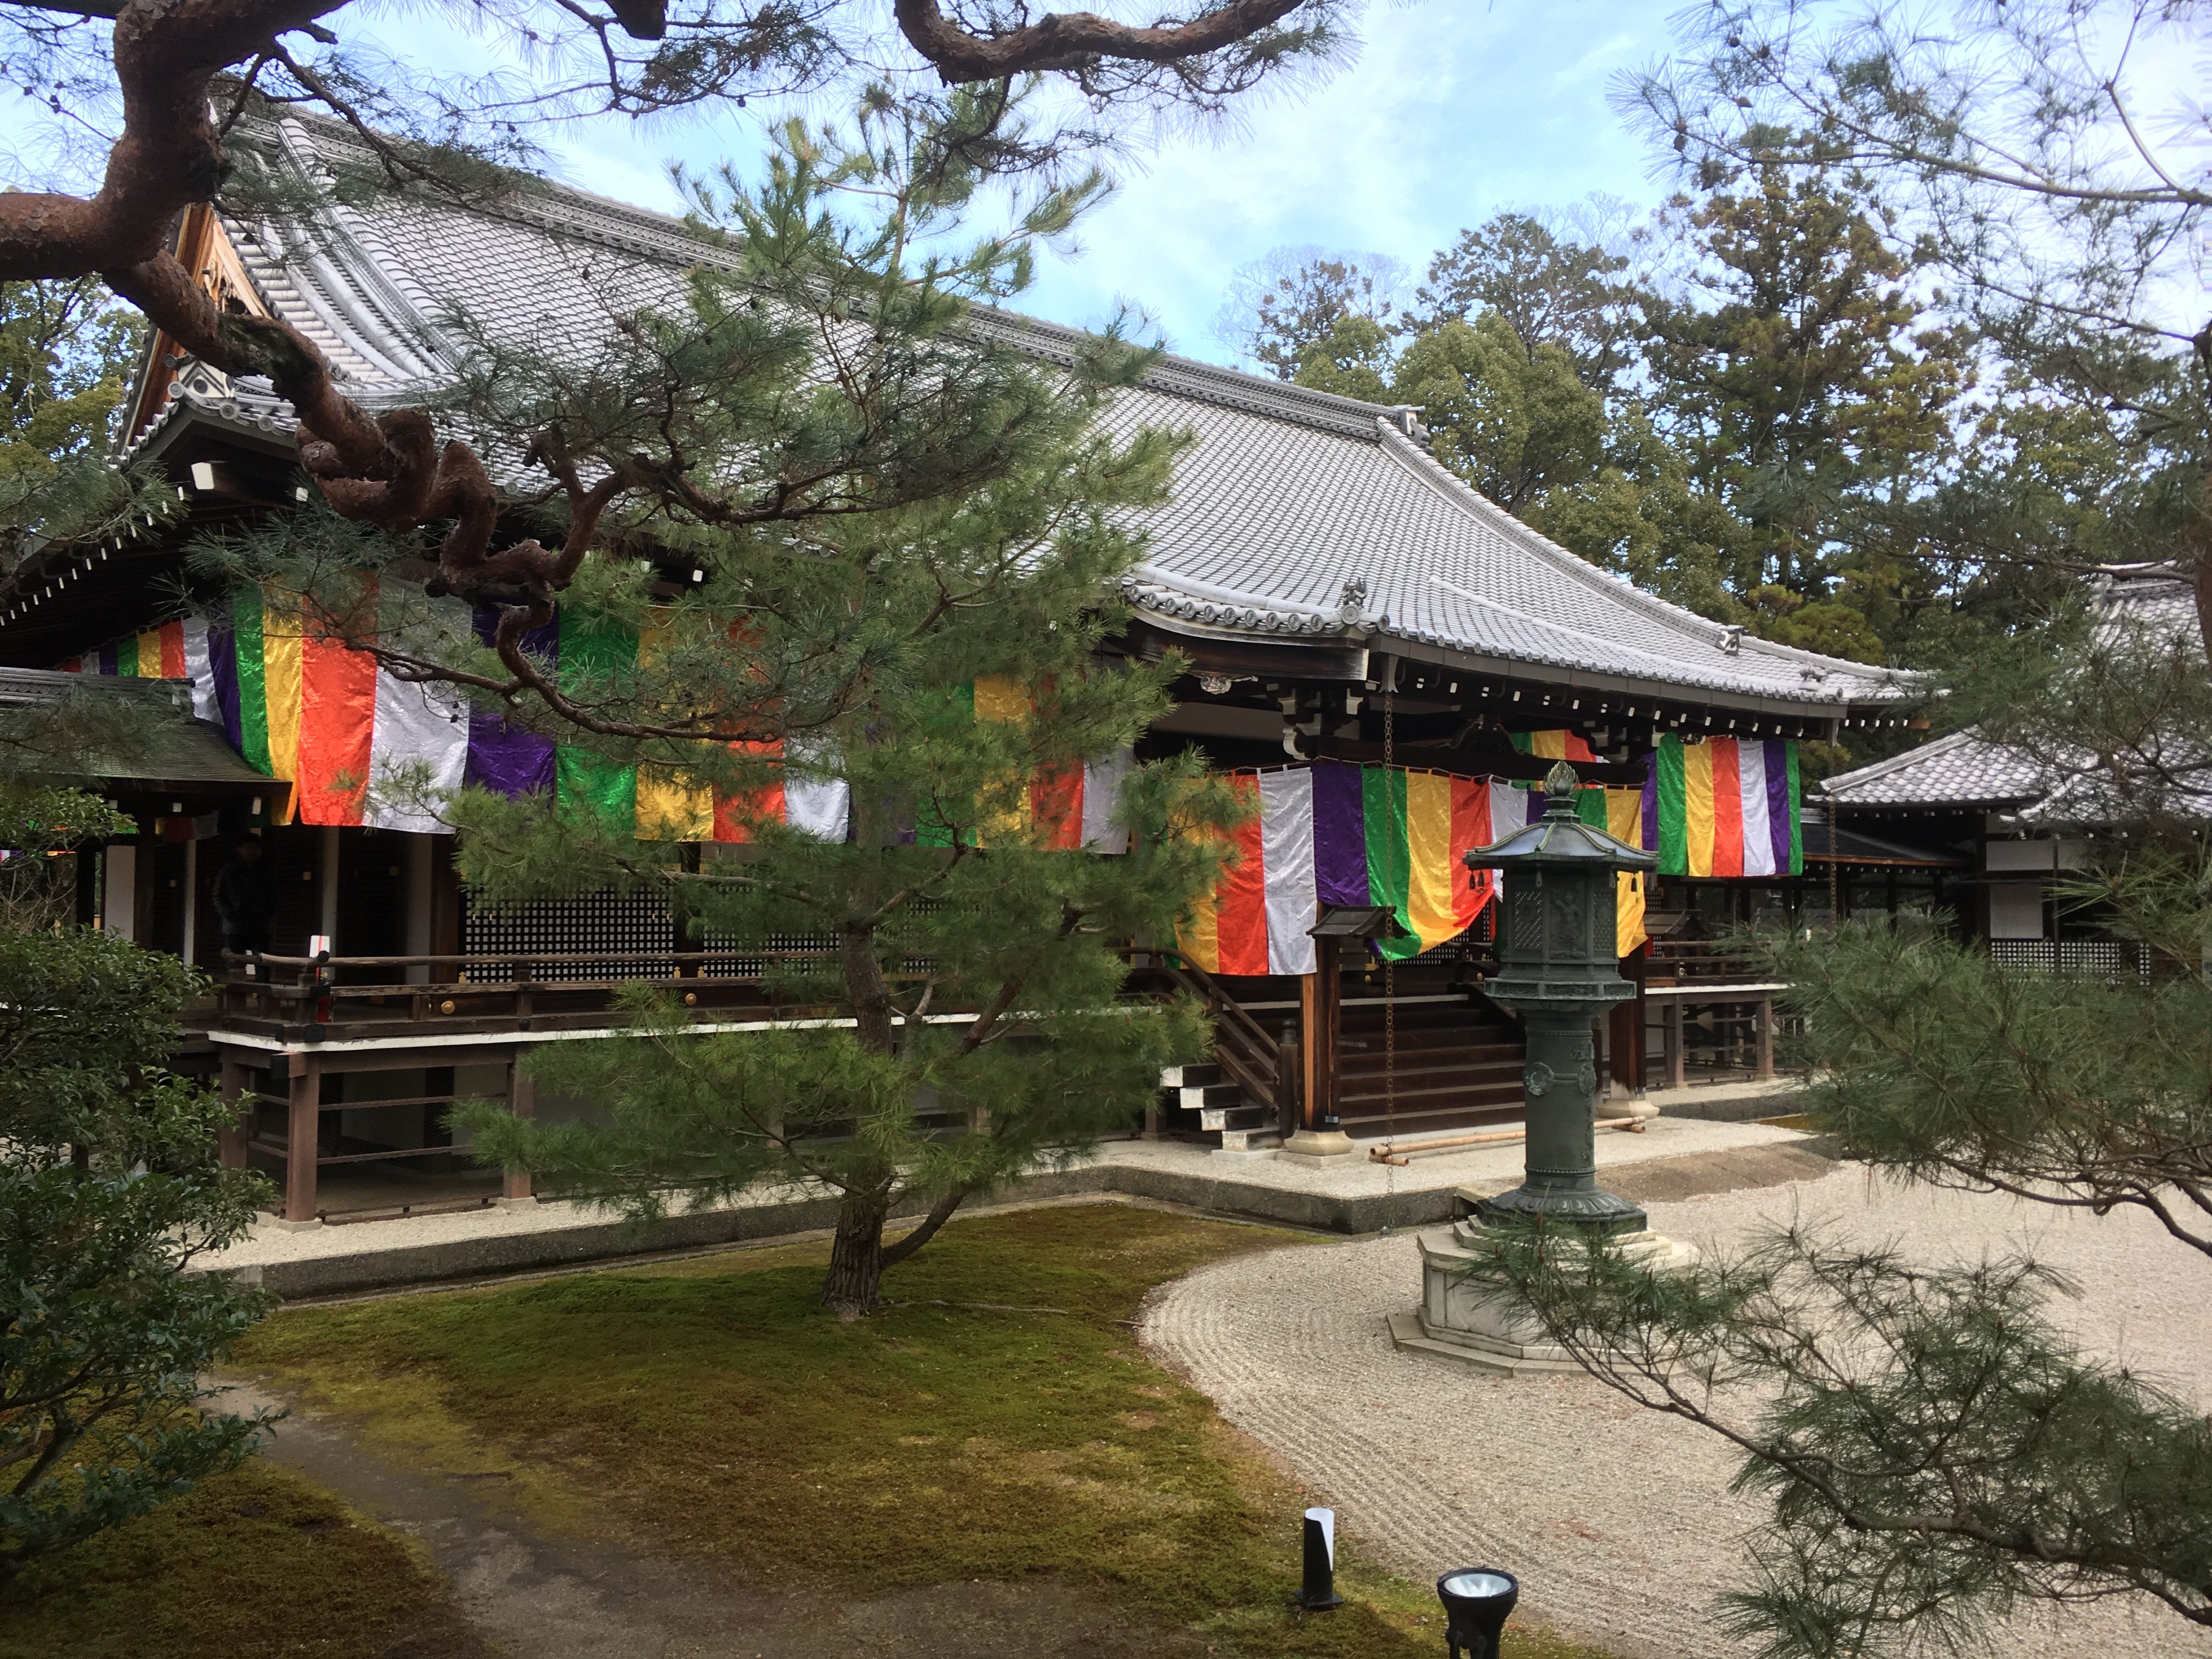 Daikaku-ji Temple of Kyoto decorated with colorful banners